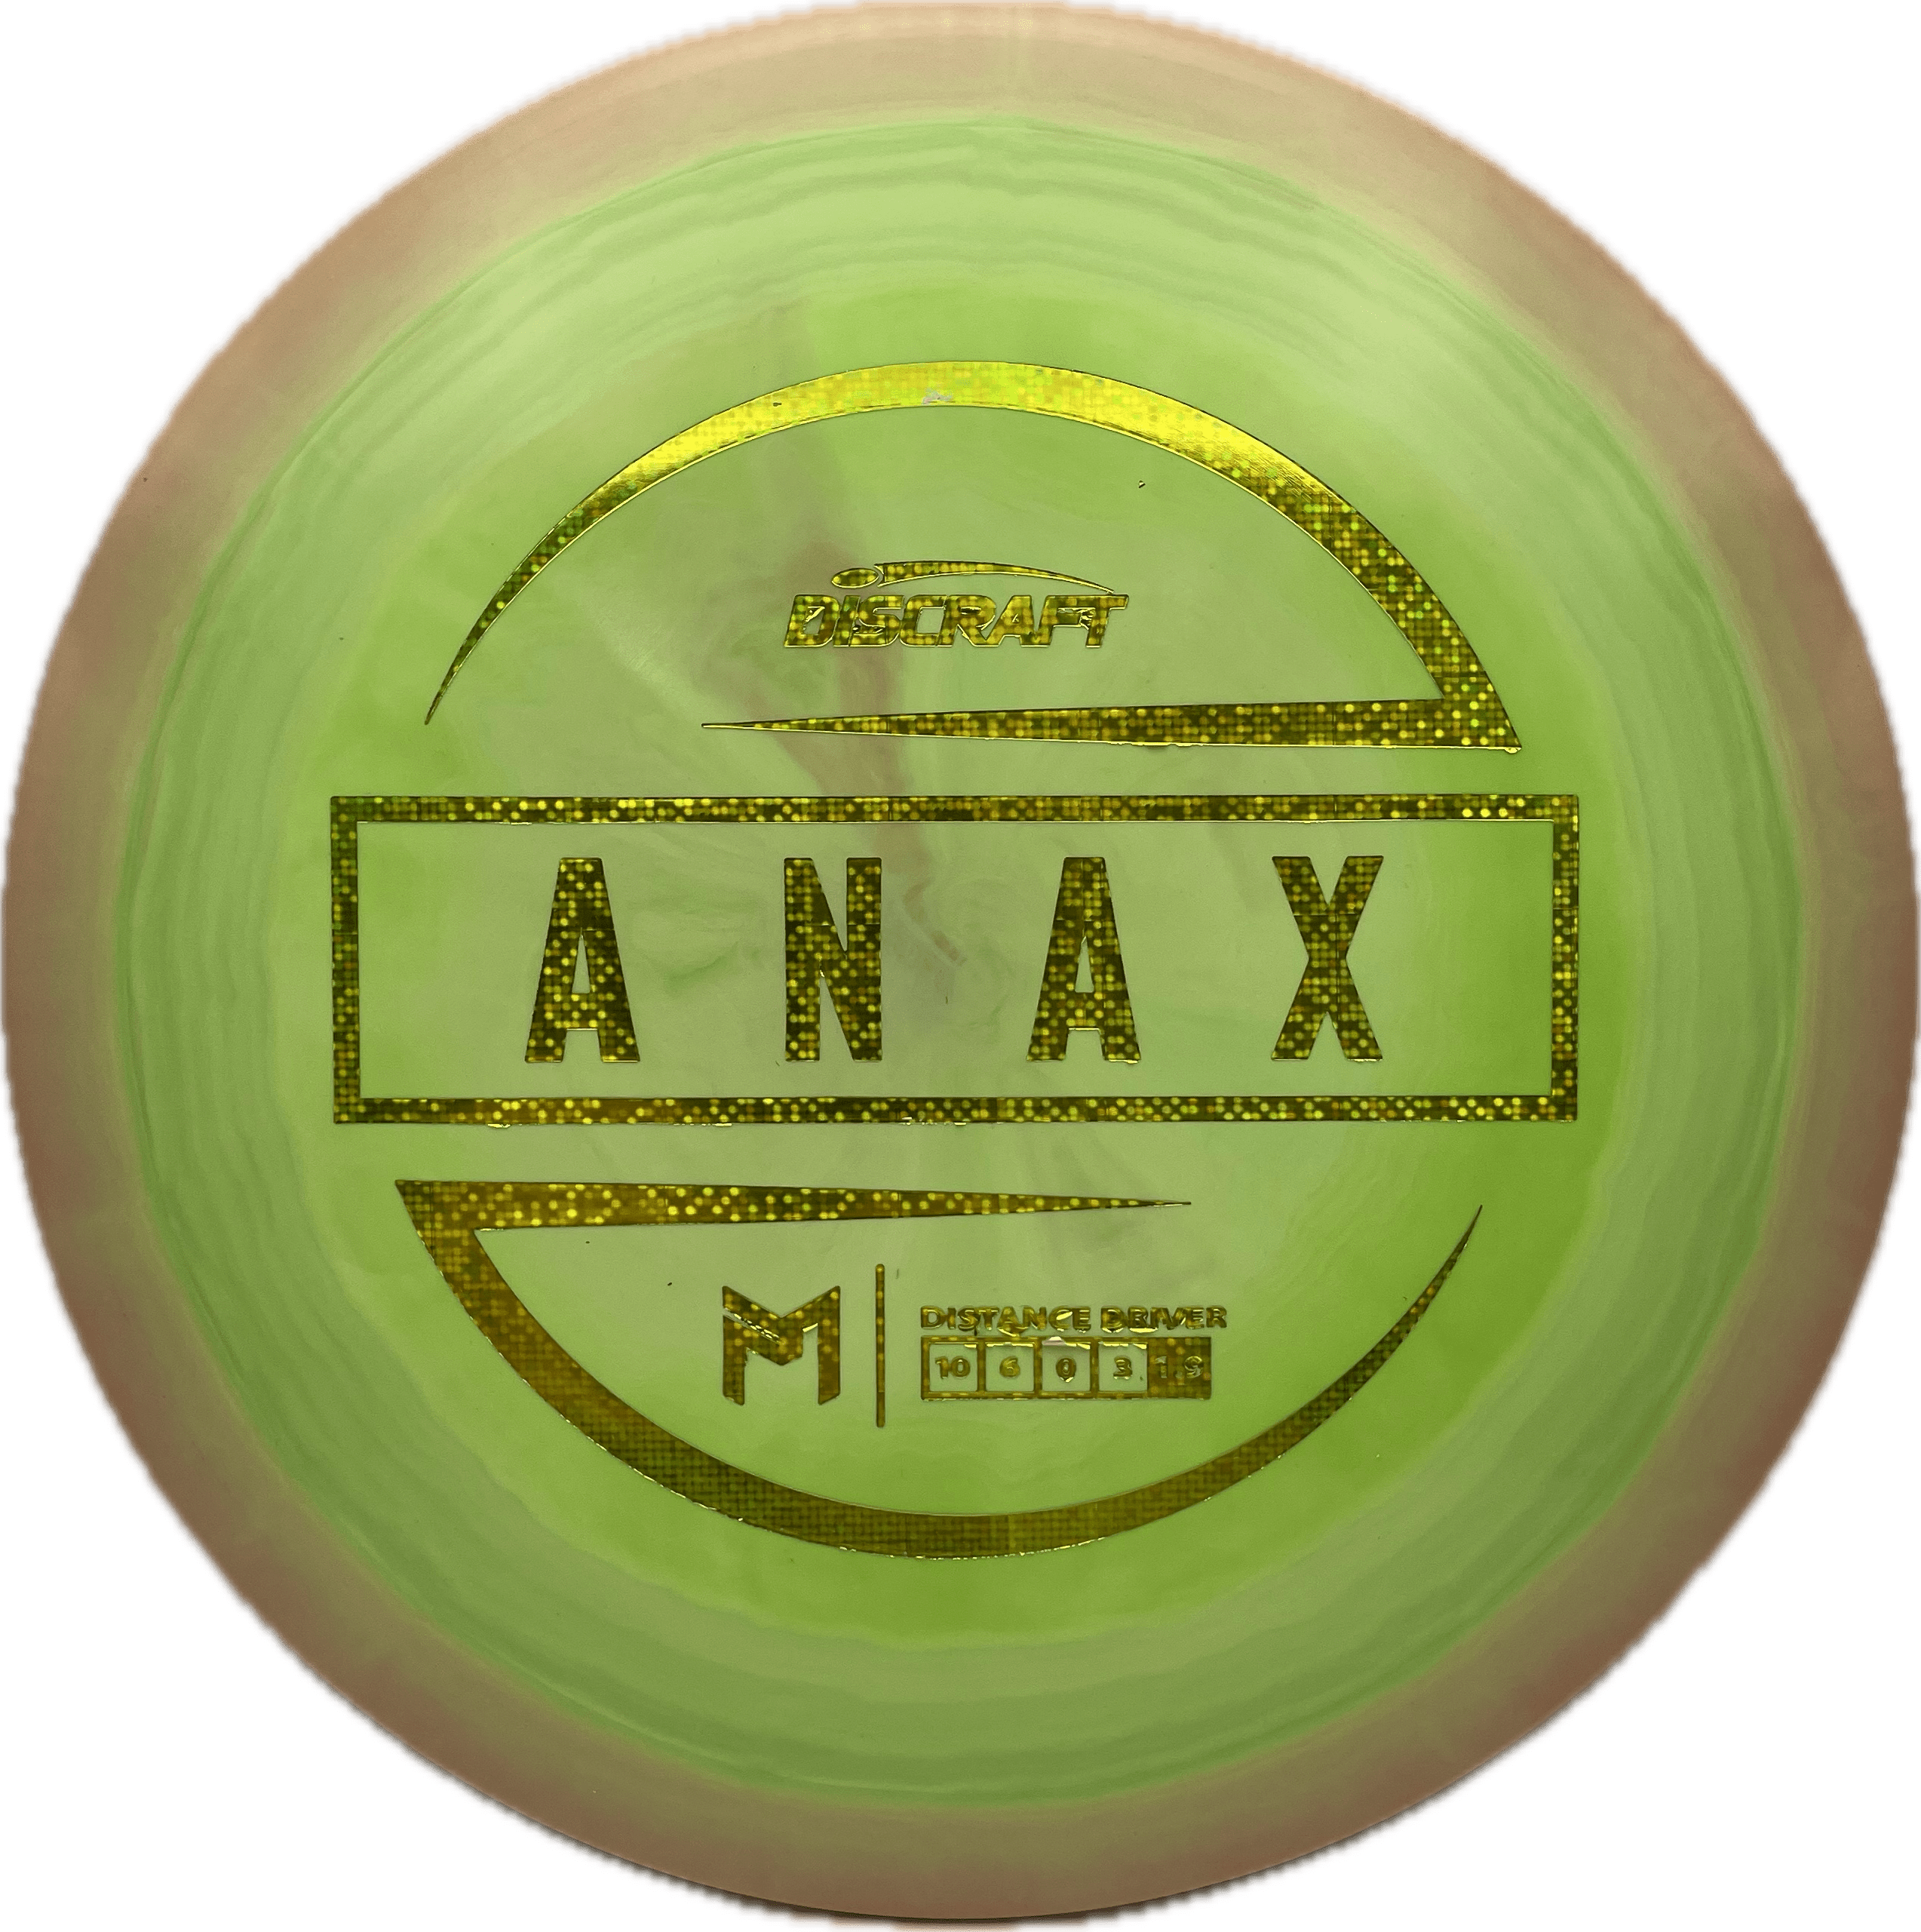 Discraft Disc Discraft Anax, ESP, 173-174, Green-to-Peach Fade, Gold Sparkles